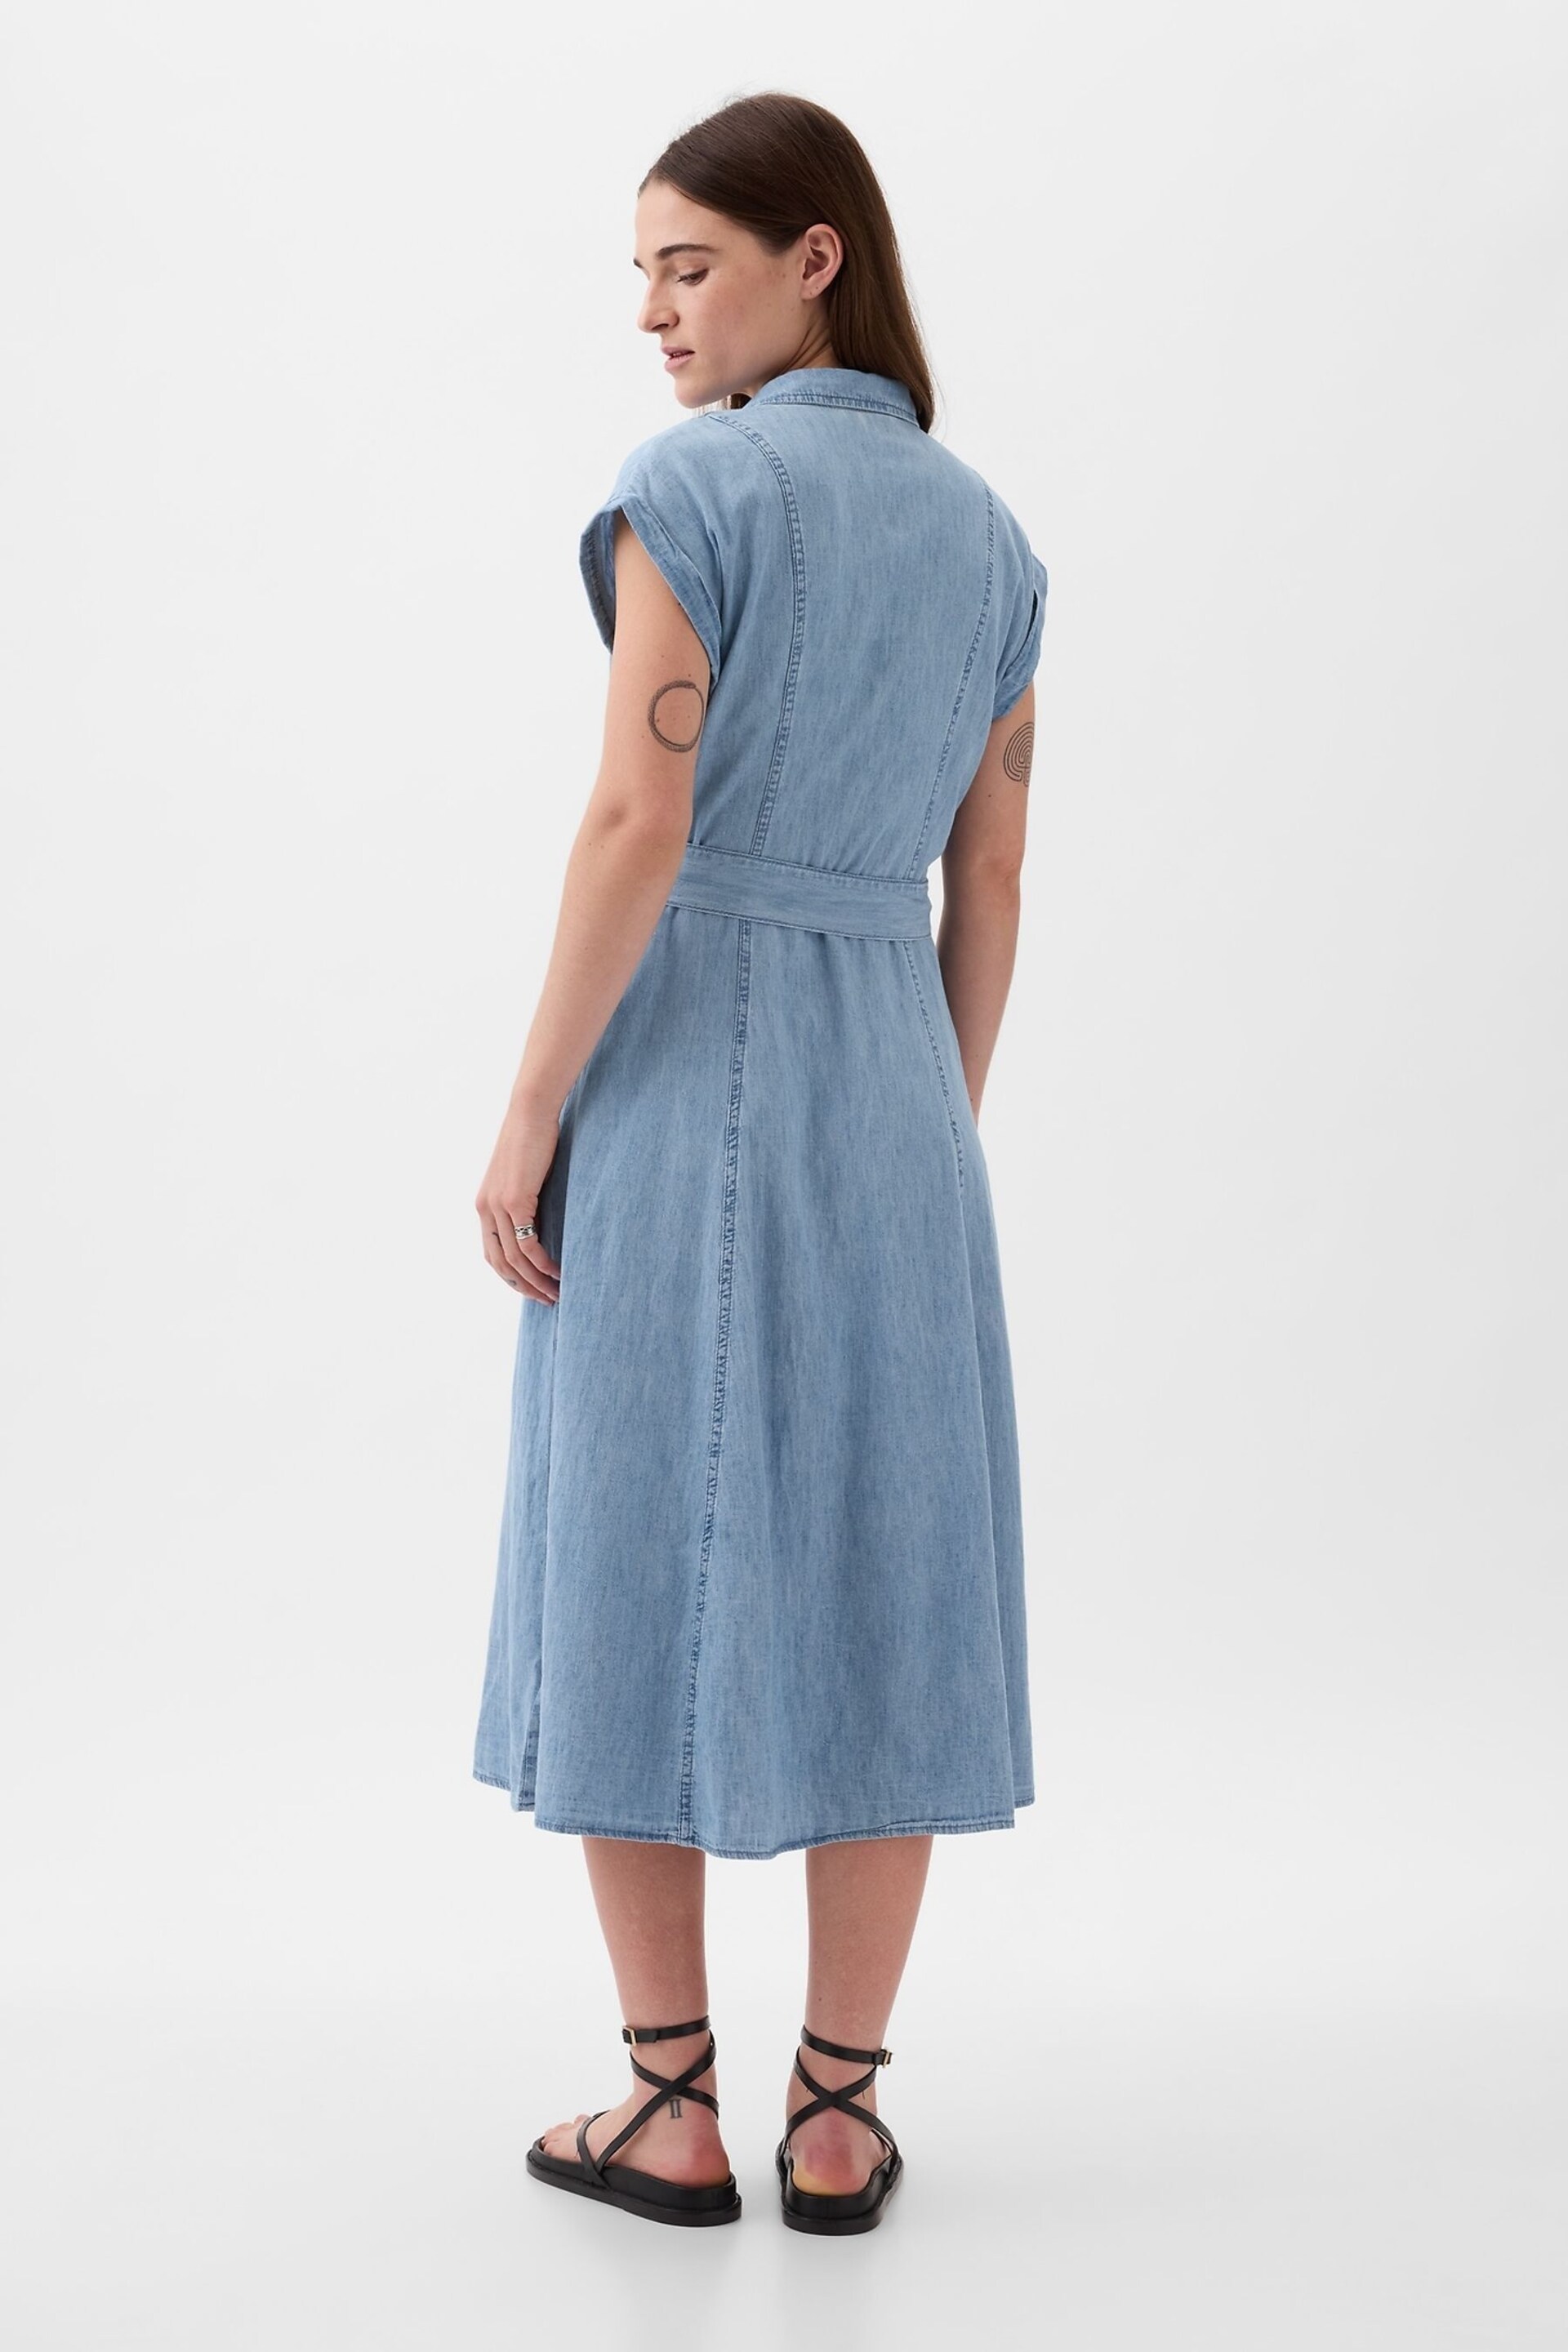 Gap Blue Denim Tie Waist Midi Shirt Dress - Image 2 of 5